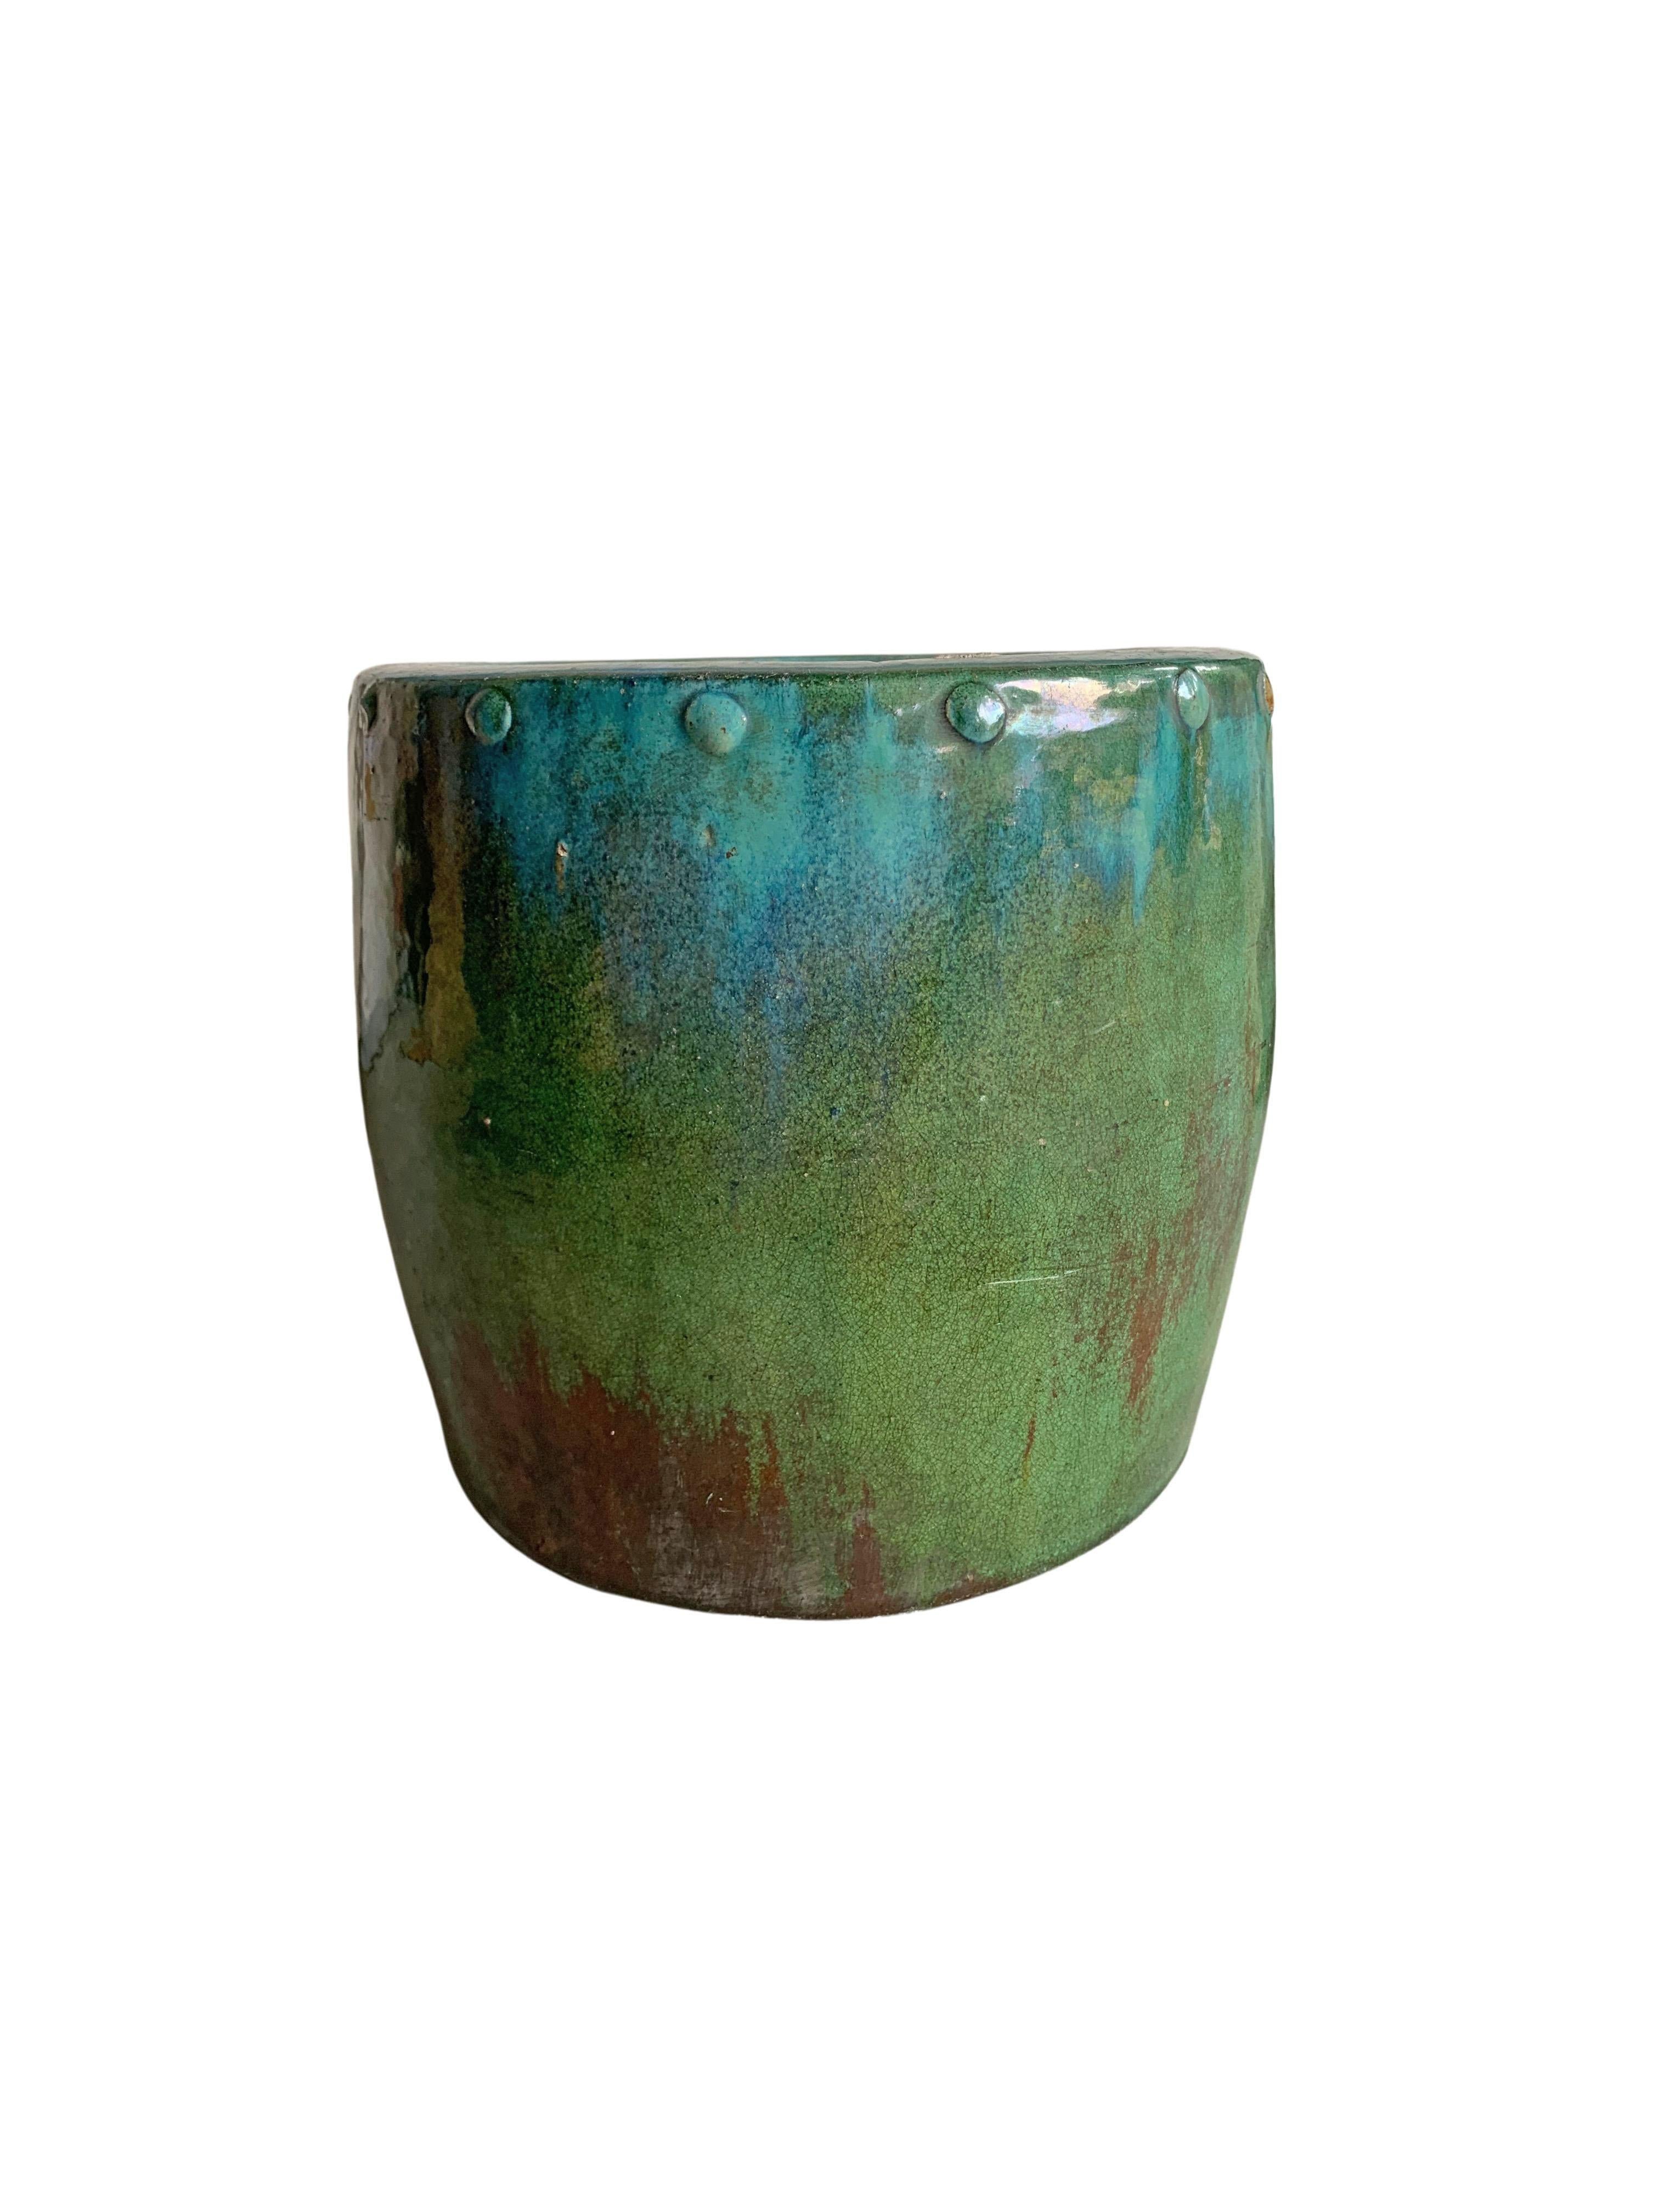 20th Century Chinese Green Glazed Ceramic Oil Storage Jar / Planter, c. 1950 For Sale